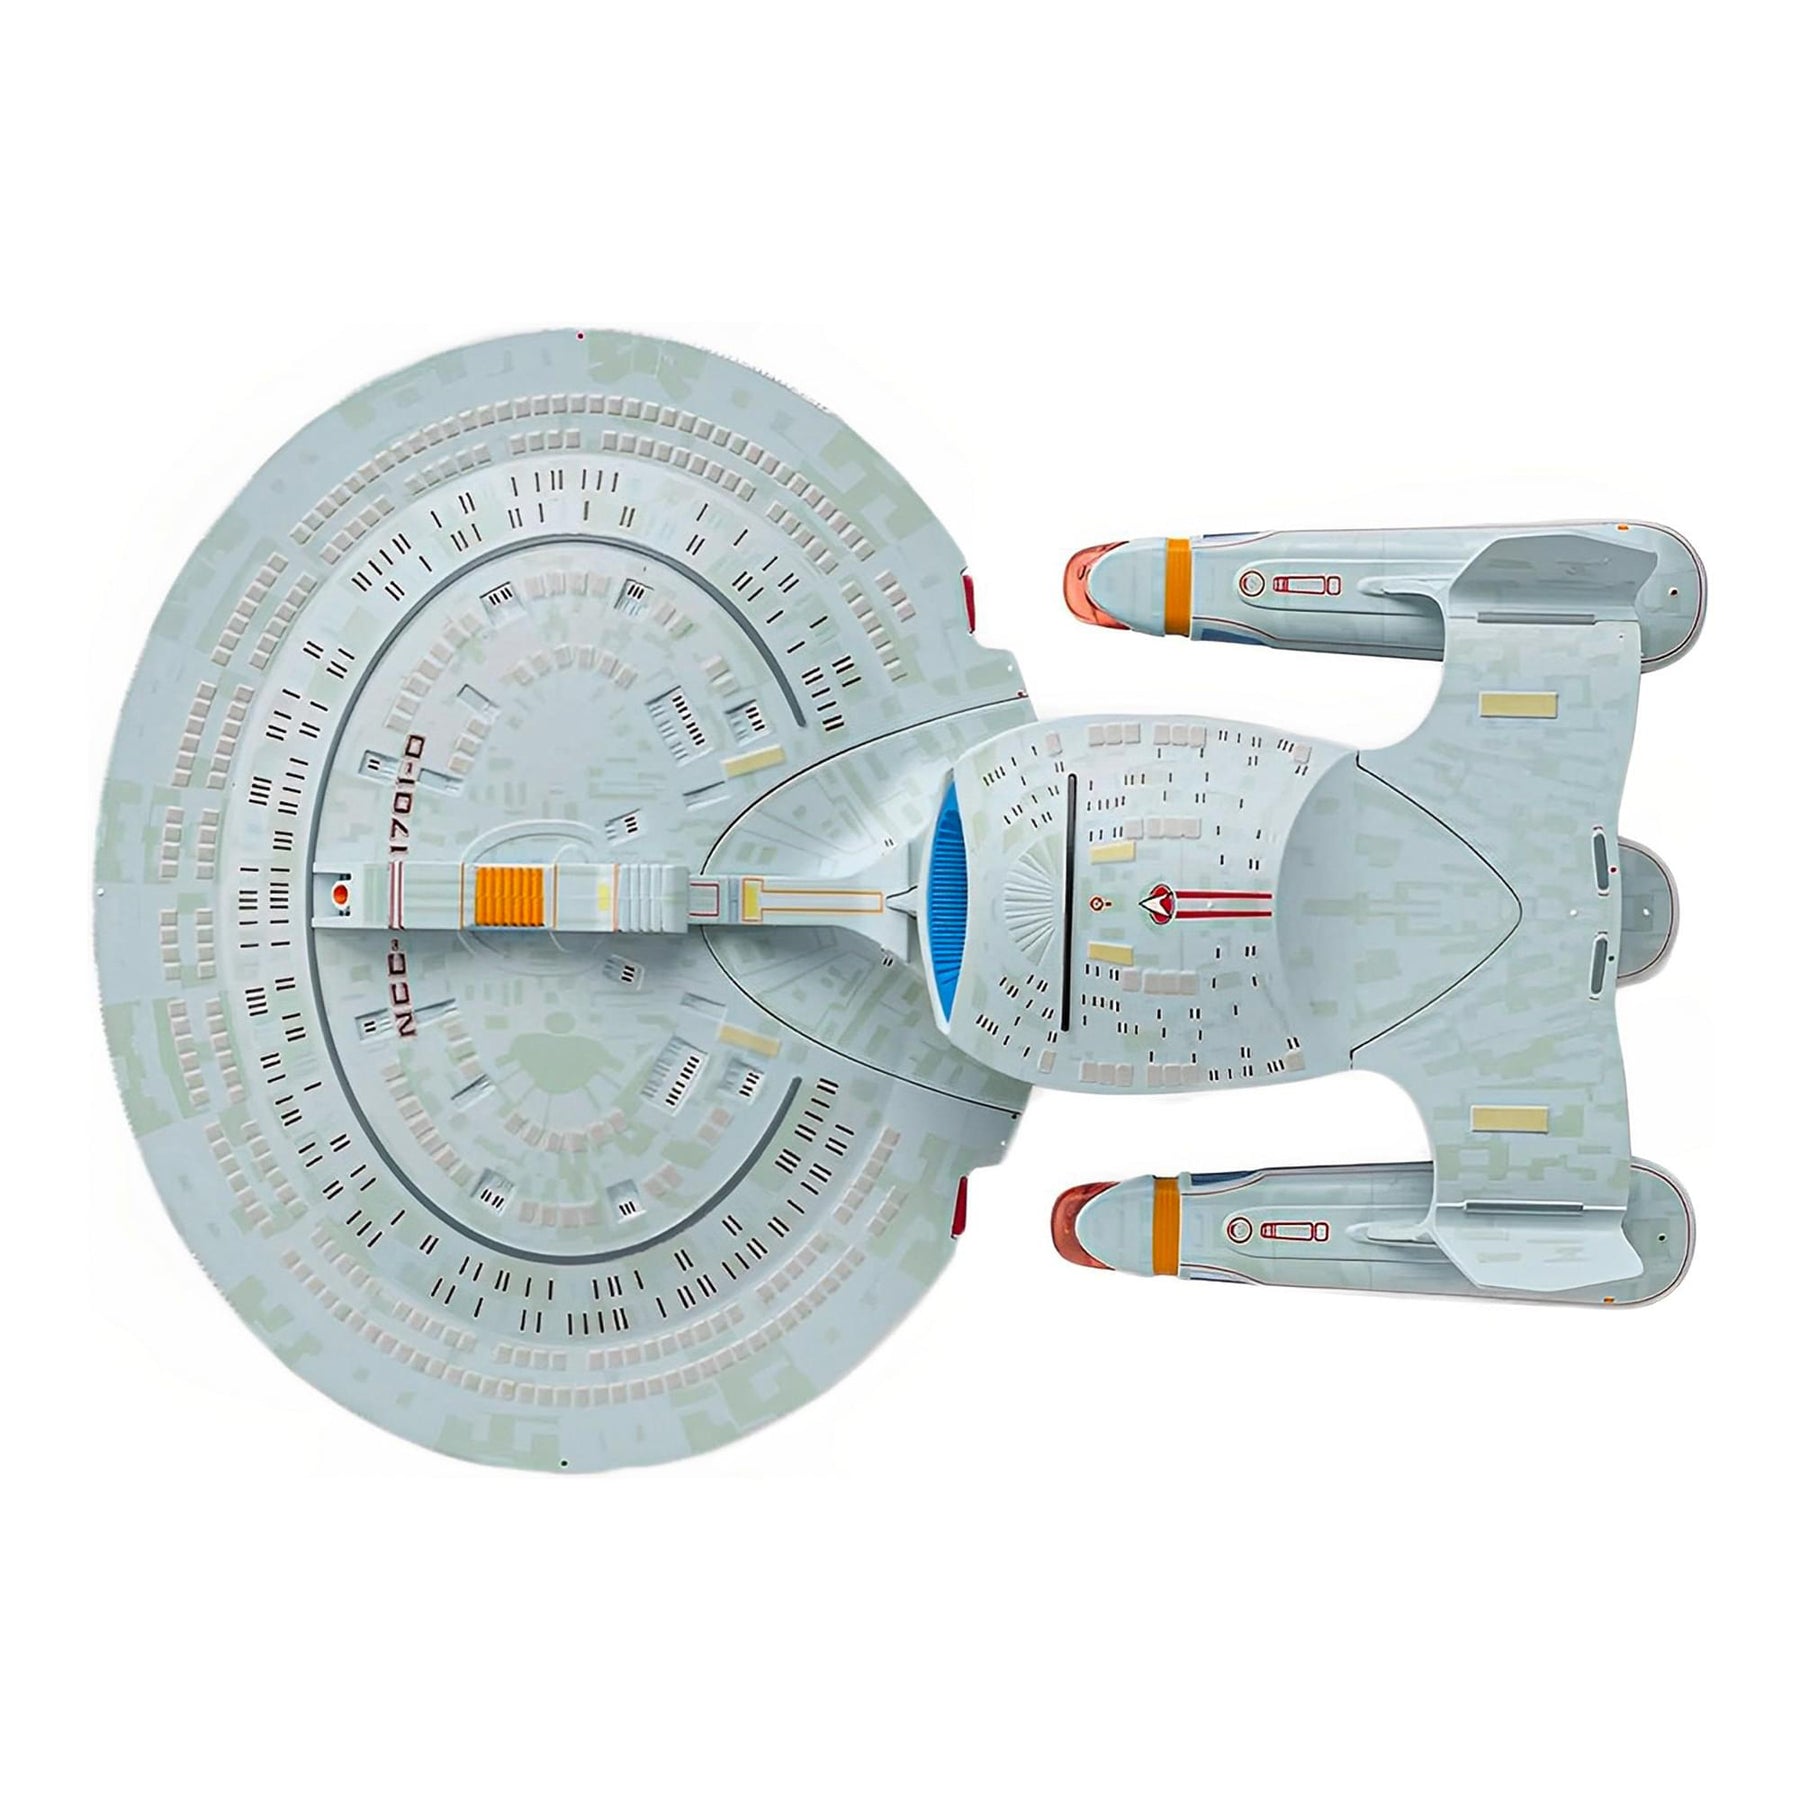 Eaglemoss Star Trek Ship Replica | U.S.S. Enterprise NCC 1701 D Dreadnought